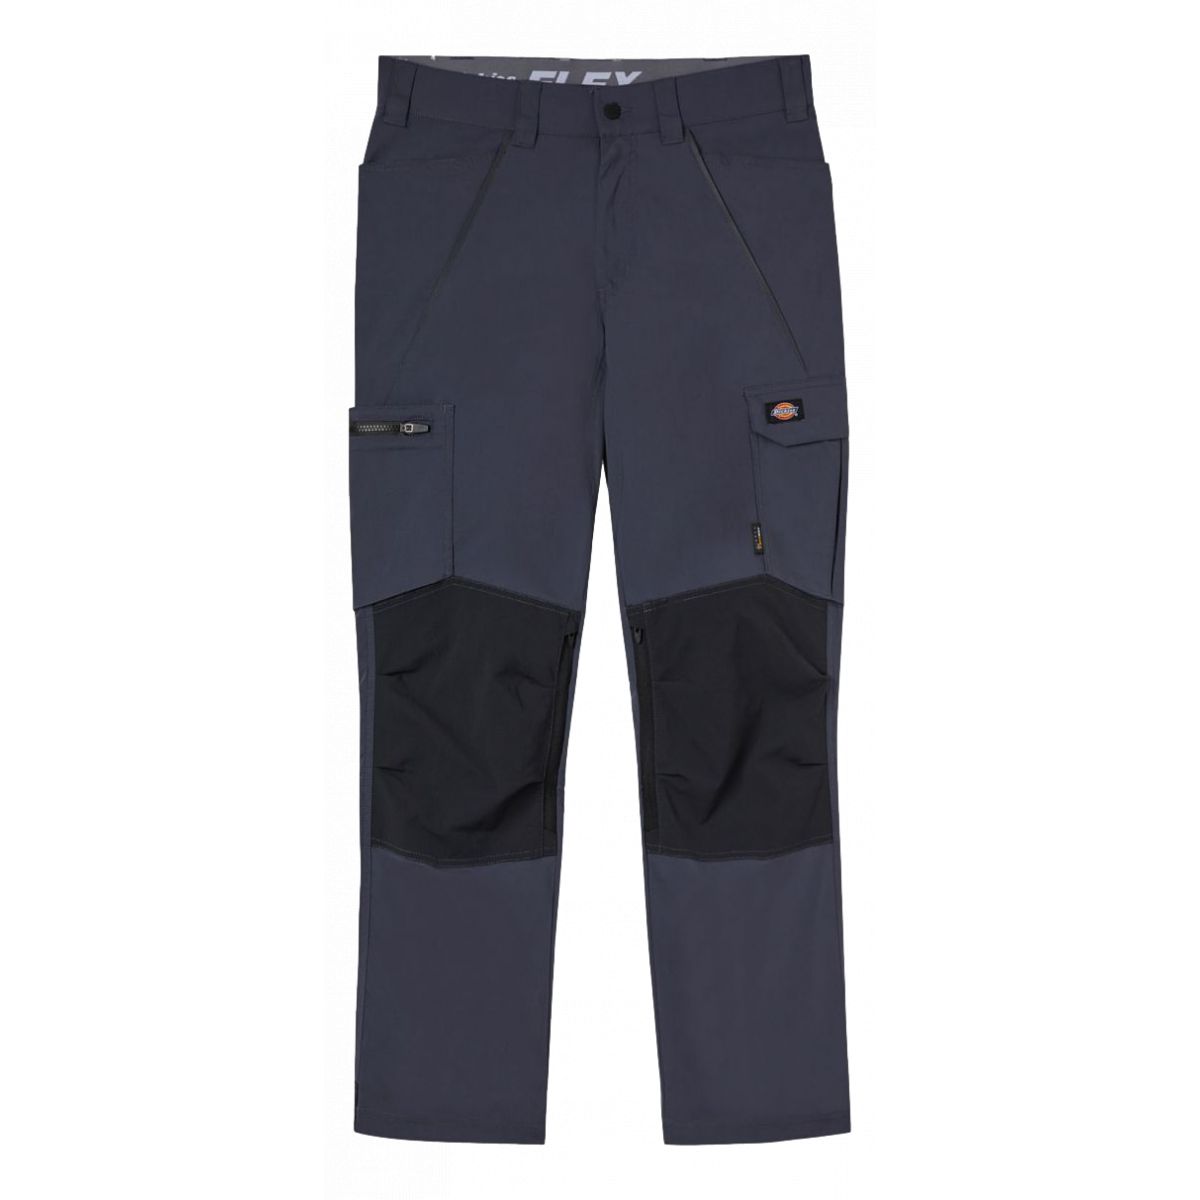 Pantalon léger Flex Gris - Dickies - Taille 50 0